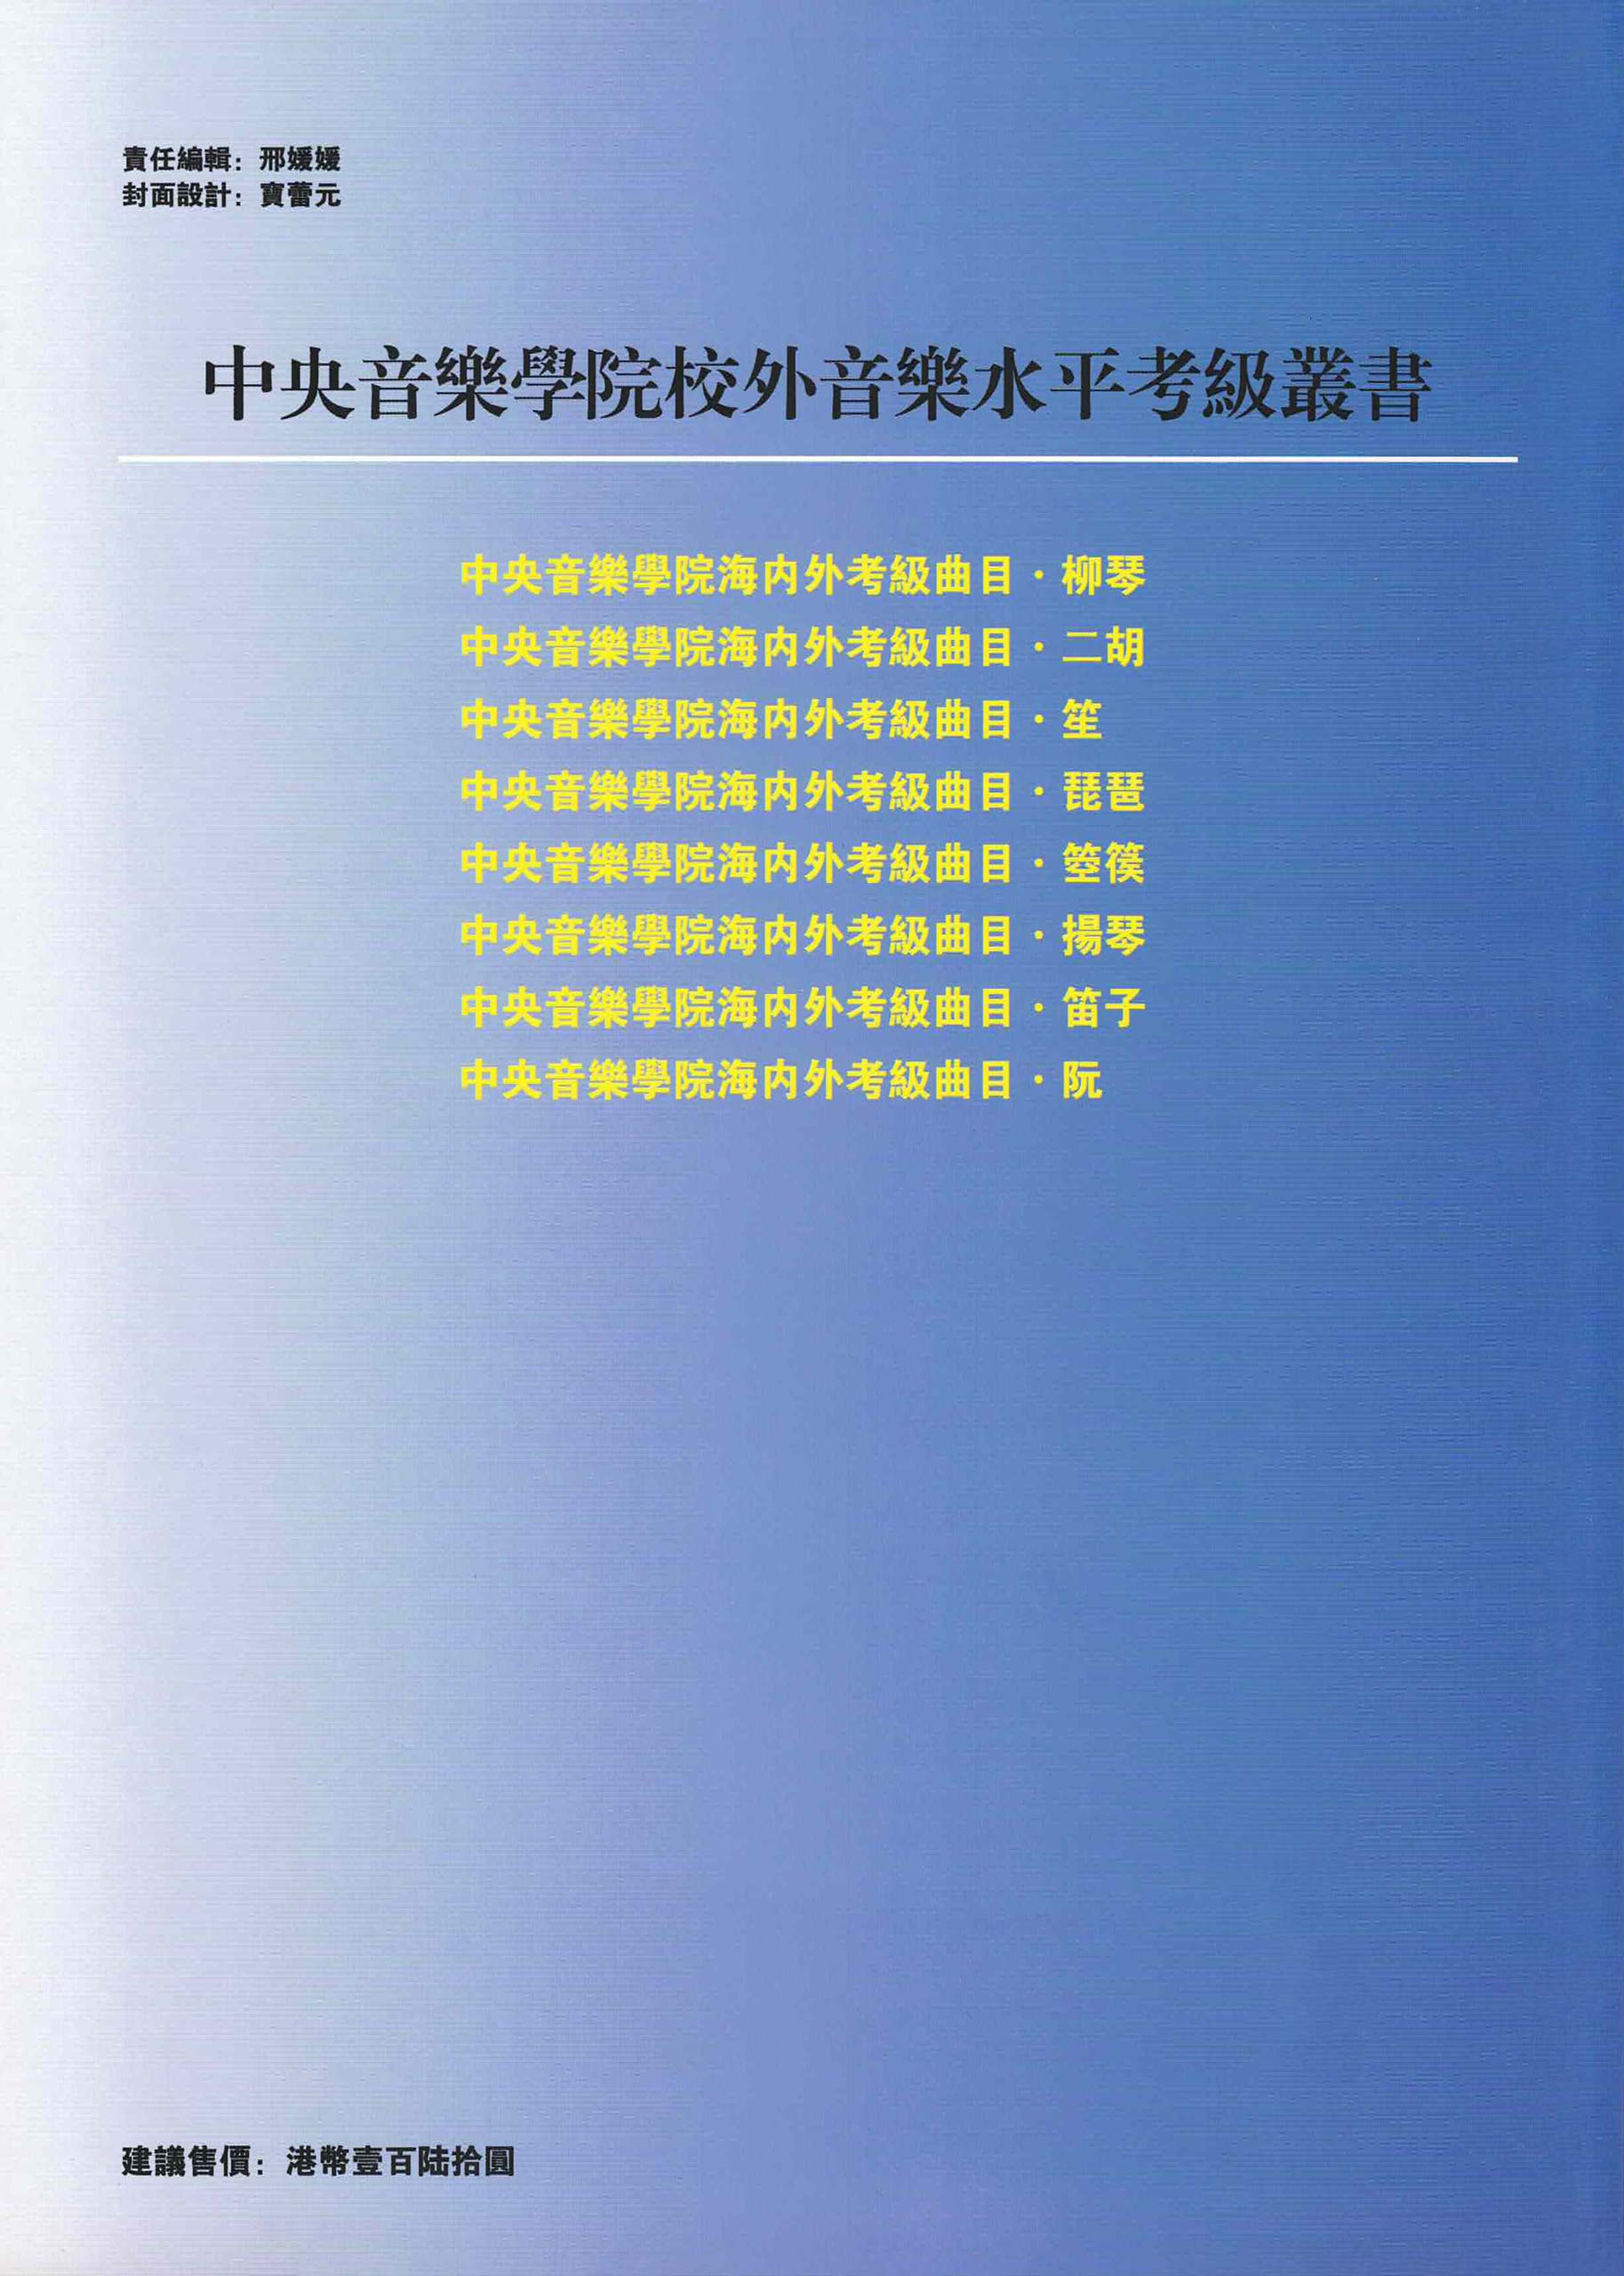 Liuqin Grading Examination Book by CCOM – NAFA (Beginner Grade 7-9) Back Cover